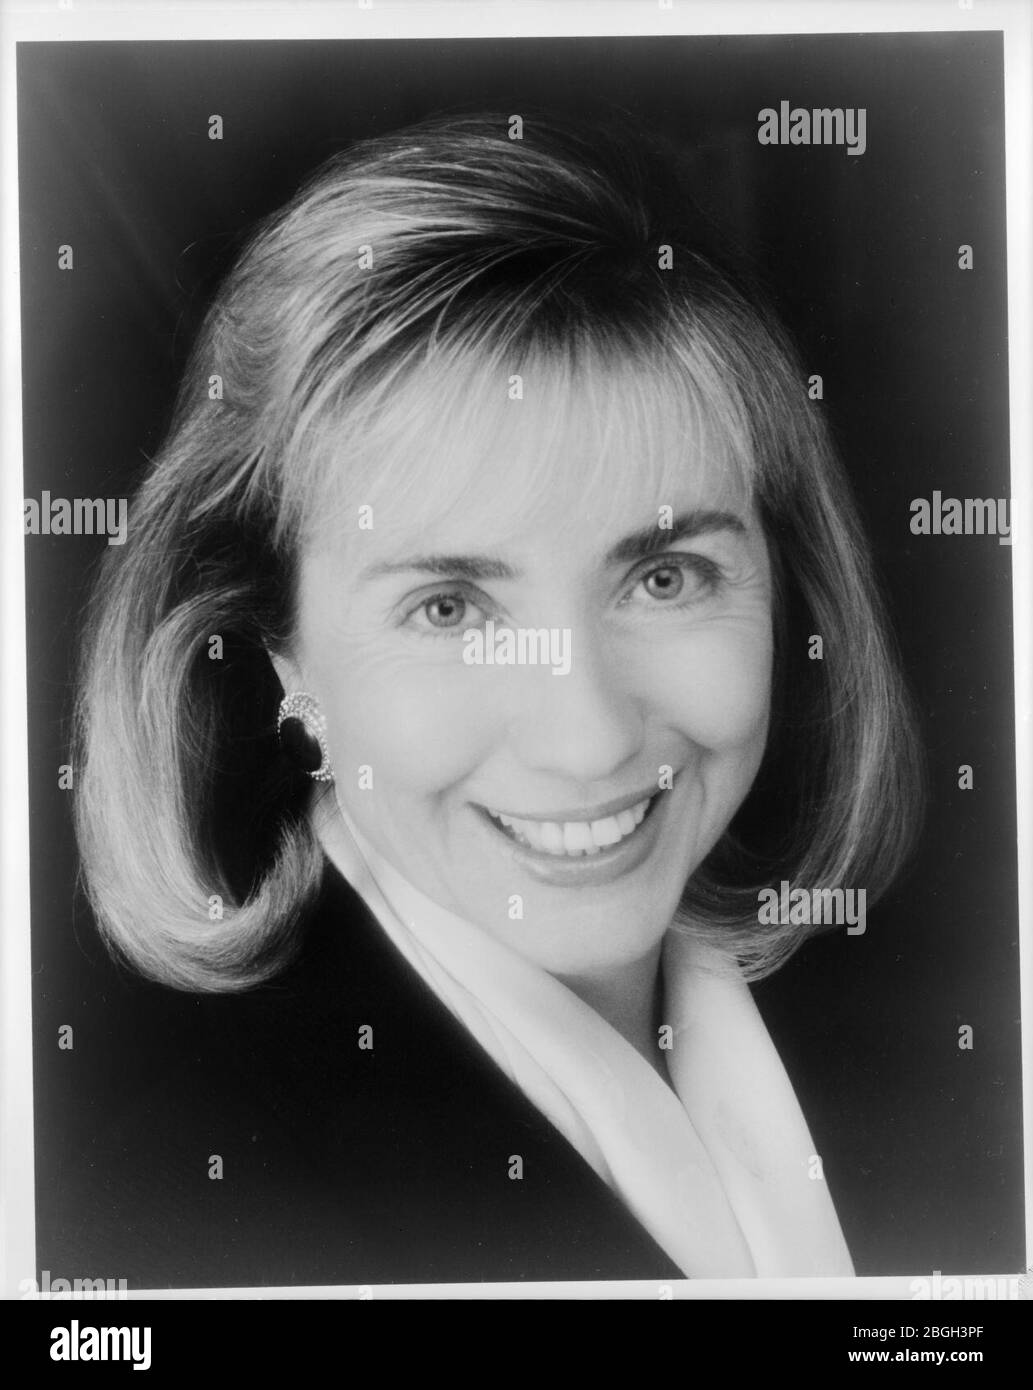 Hillary Clinton in 1992 3c39377. Stock Photo